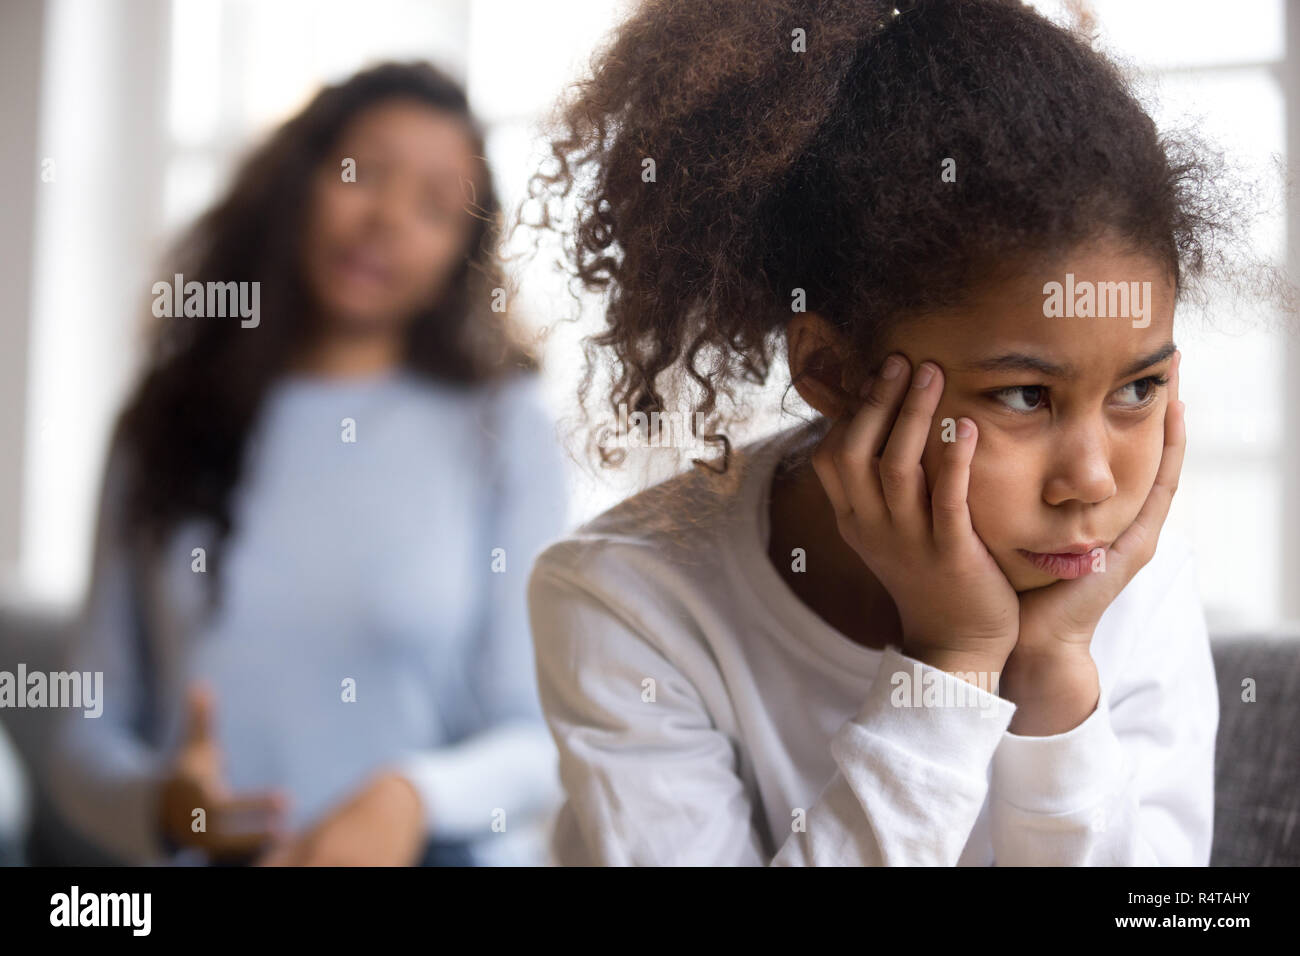 Offended African American preschooler girl looking in distance Stock Photo